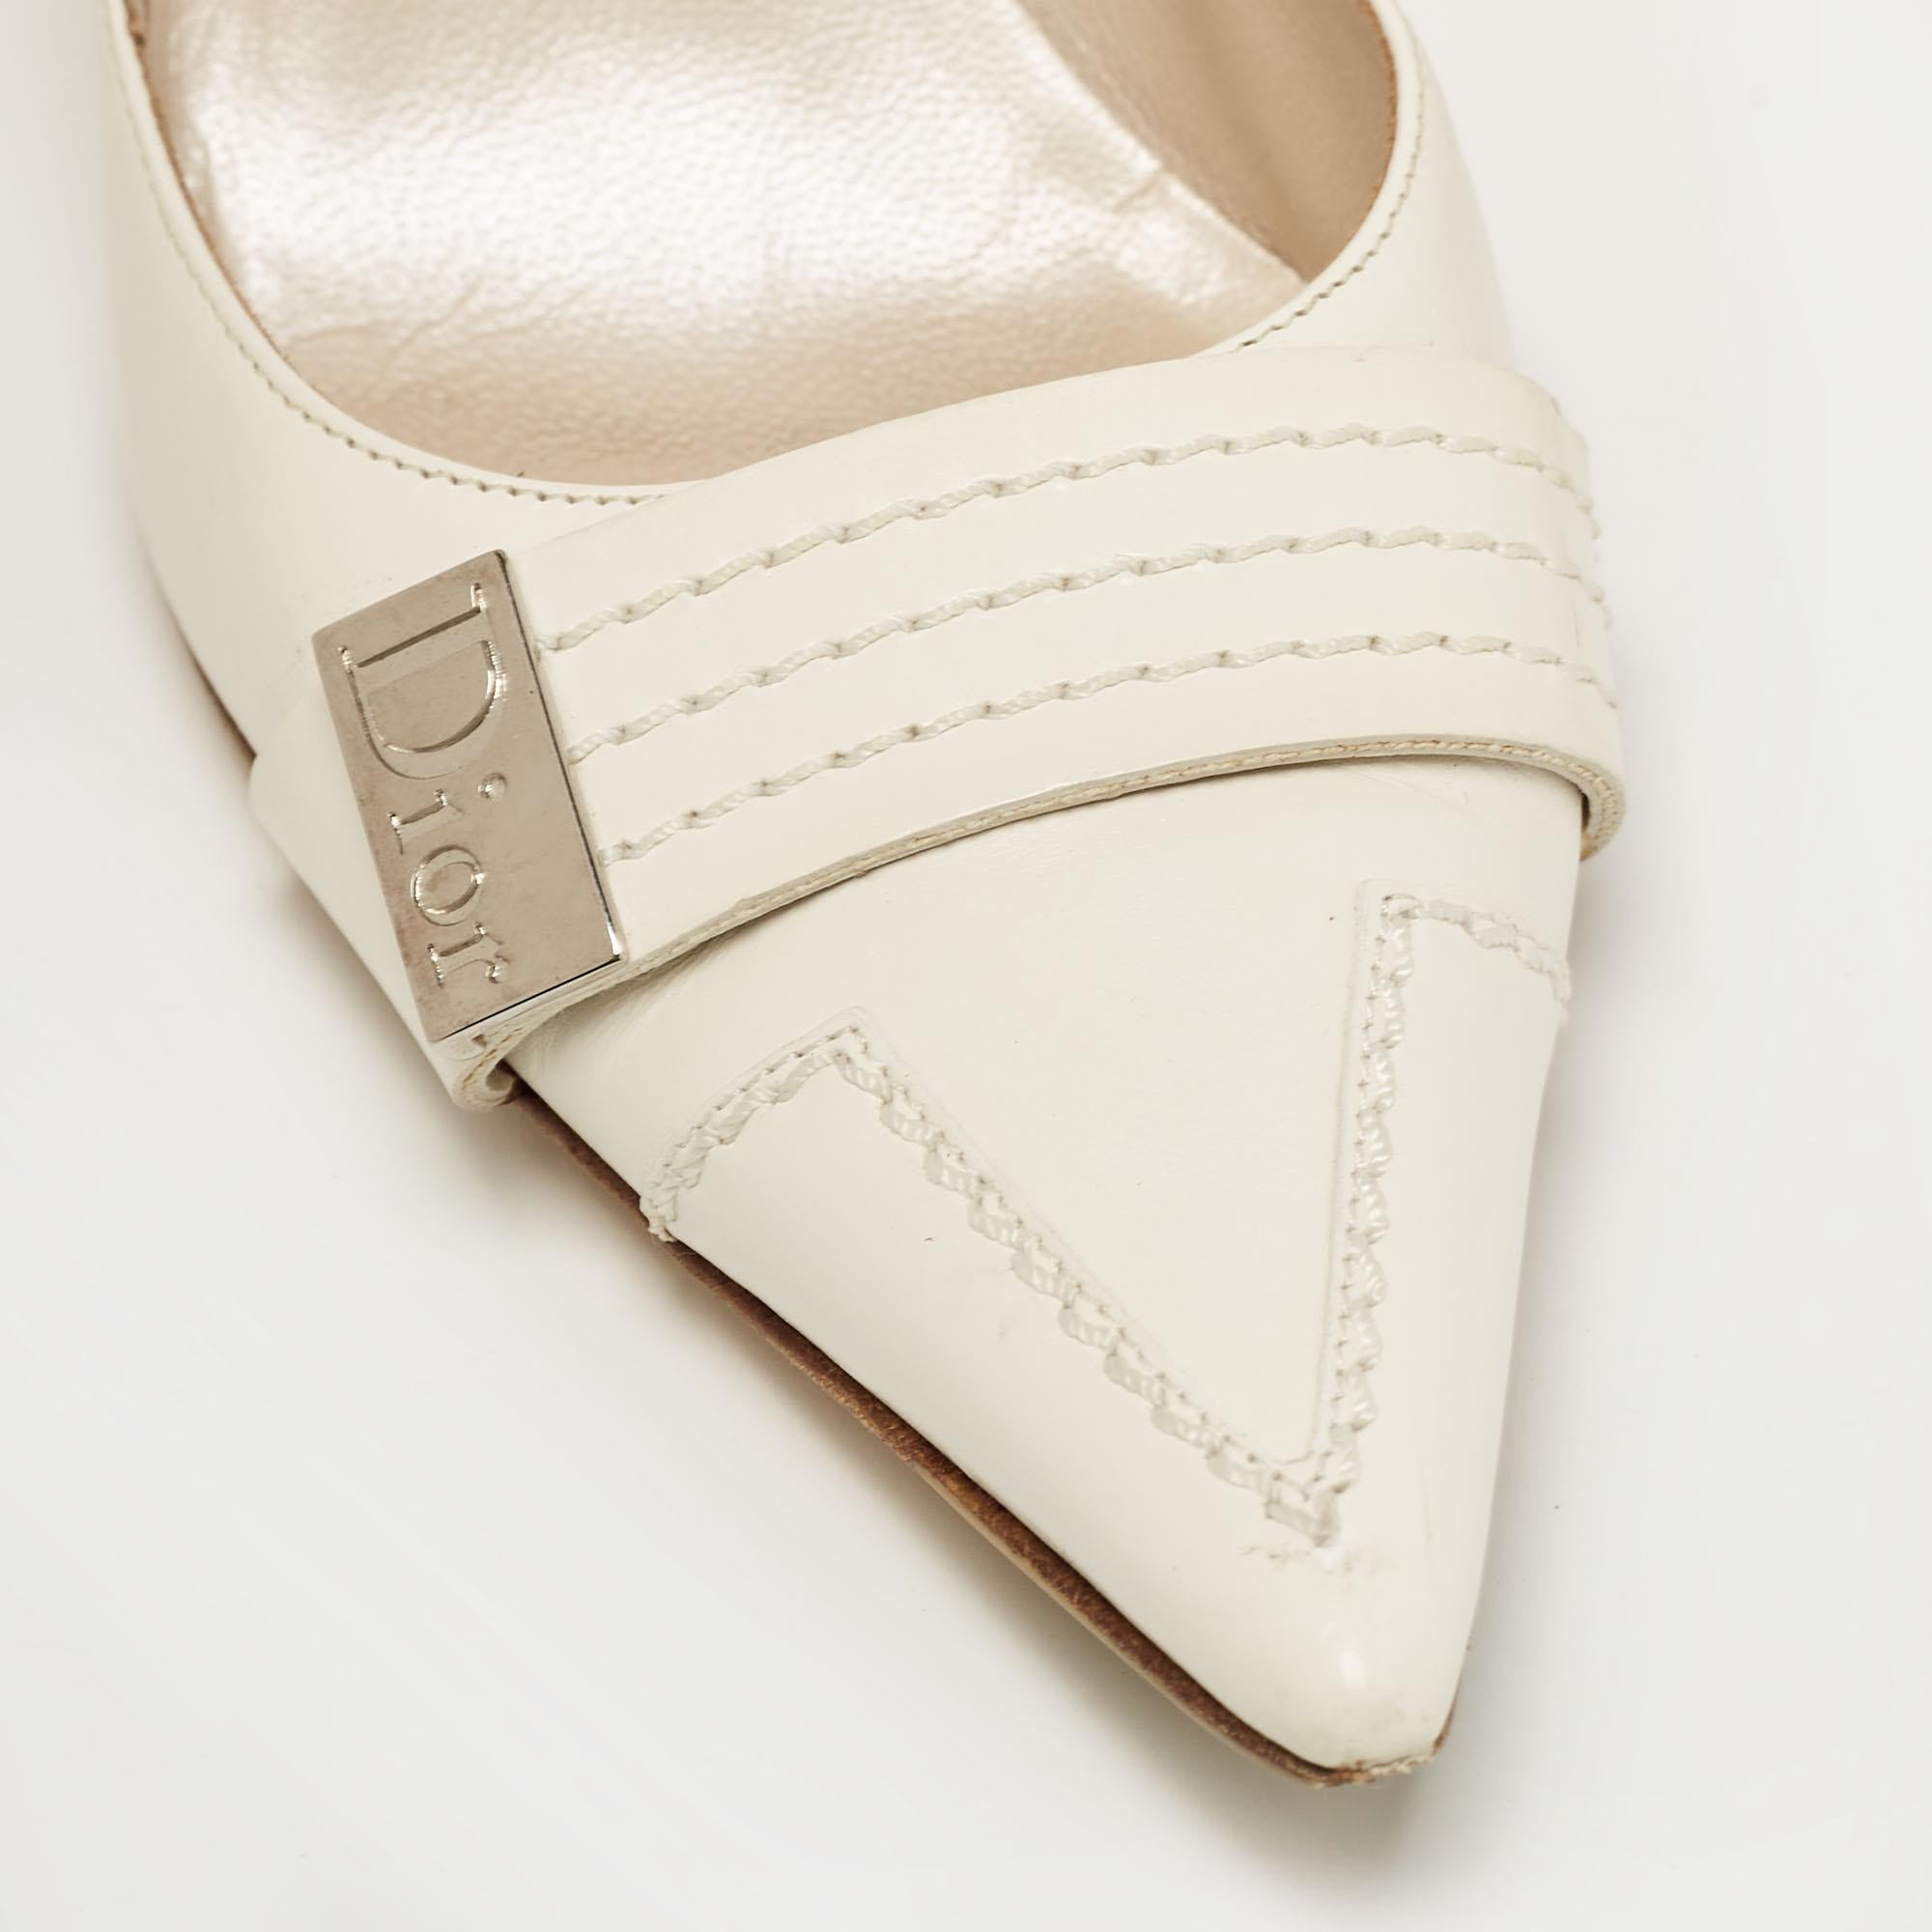 Dior White Leather Pointed Toe Pumps Size 36 In Good Condition For Sale In Dubai, Al Qouz 2